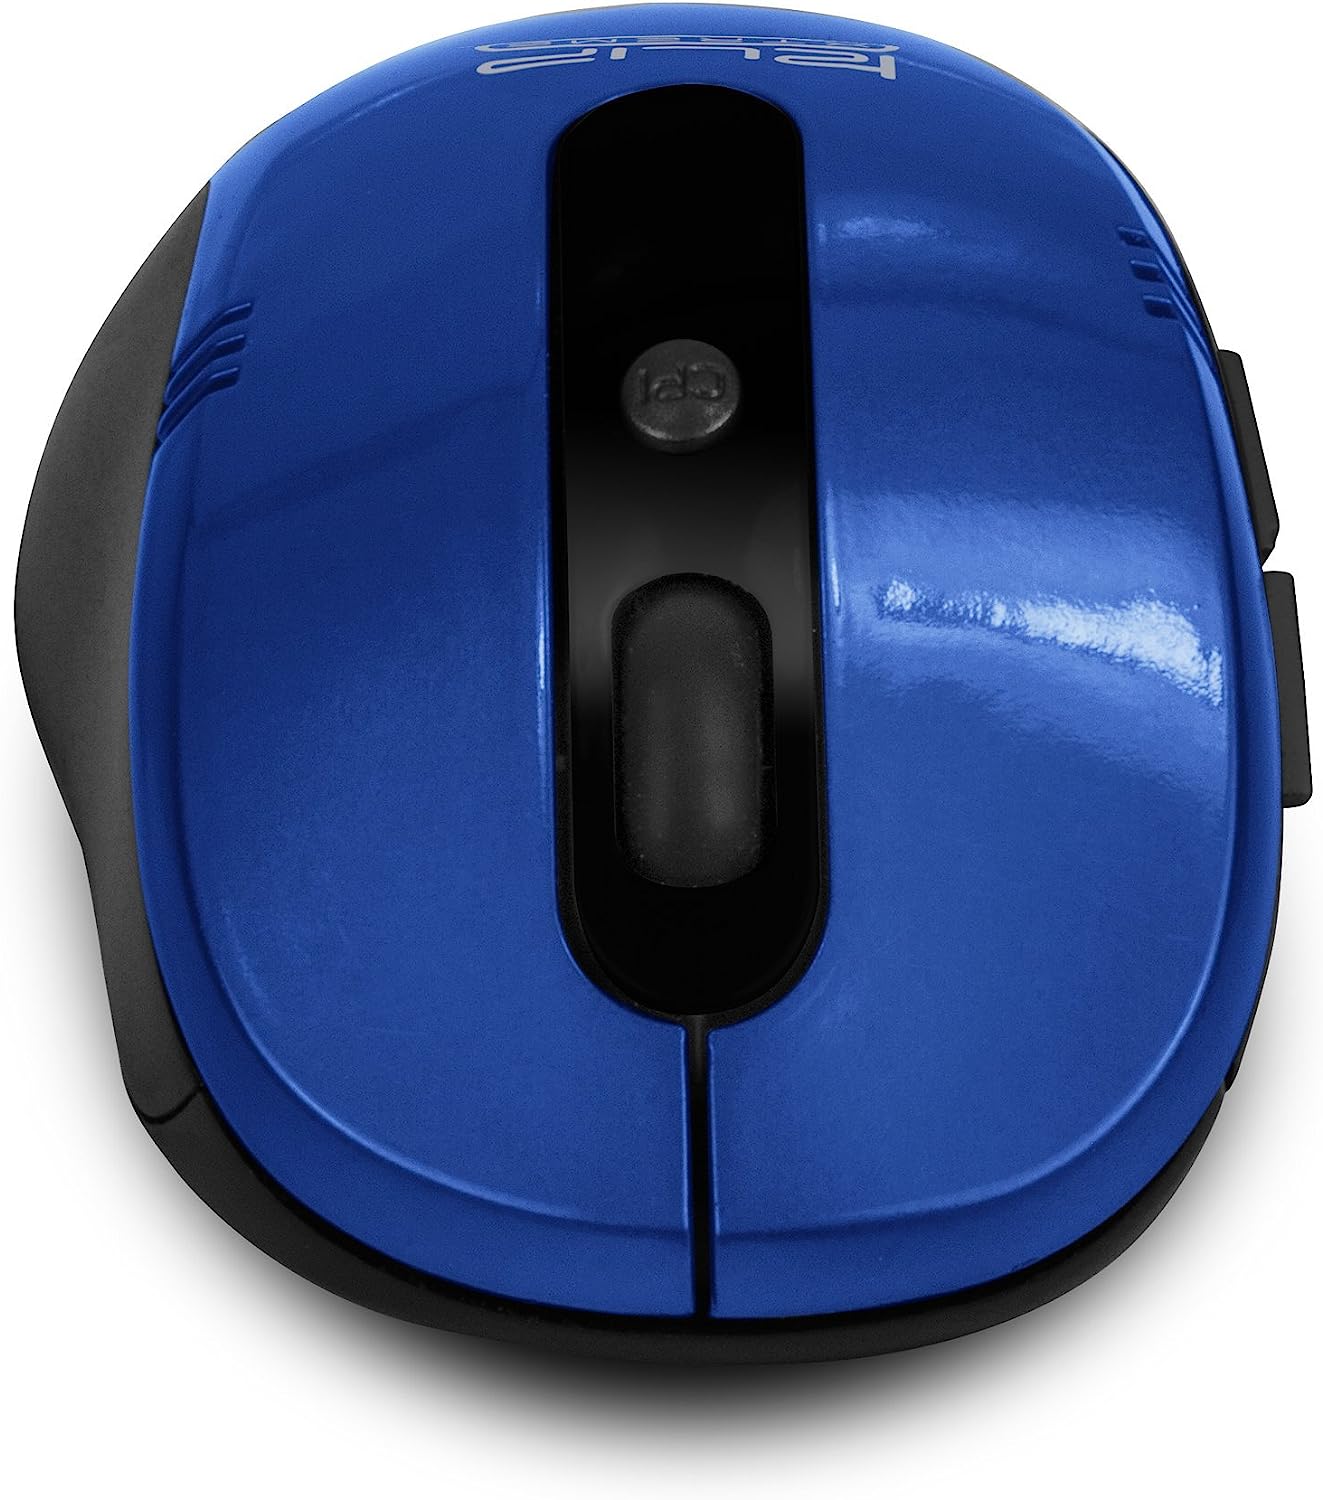 Mouse Inalámbrico KLIPxtreme Vector KMW-330BL - Azul